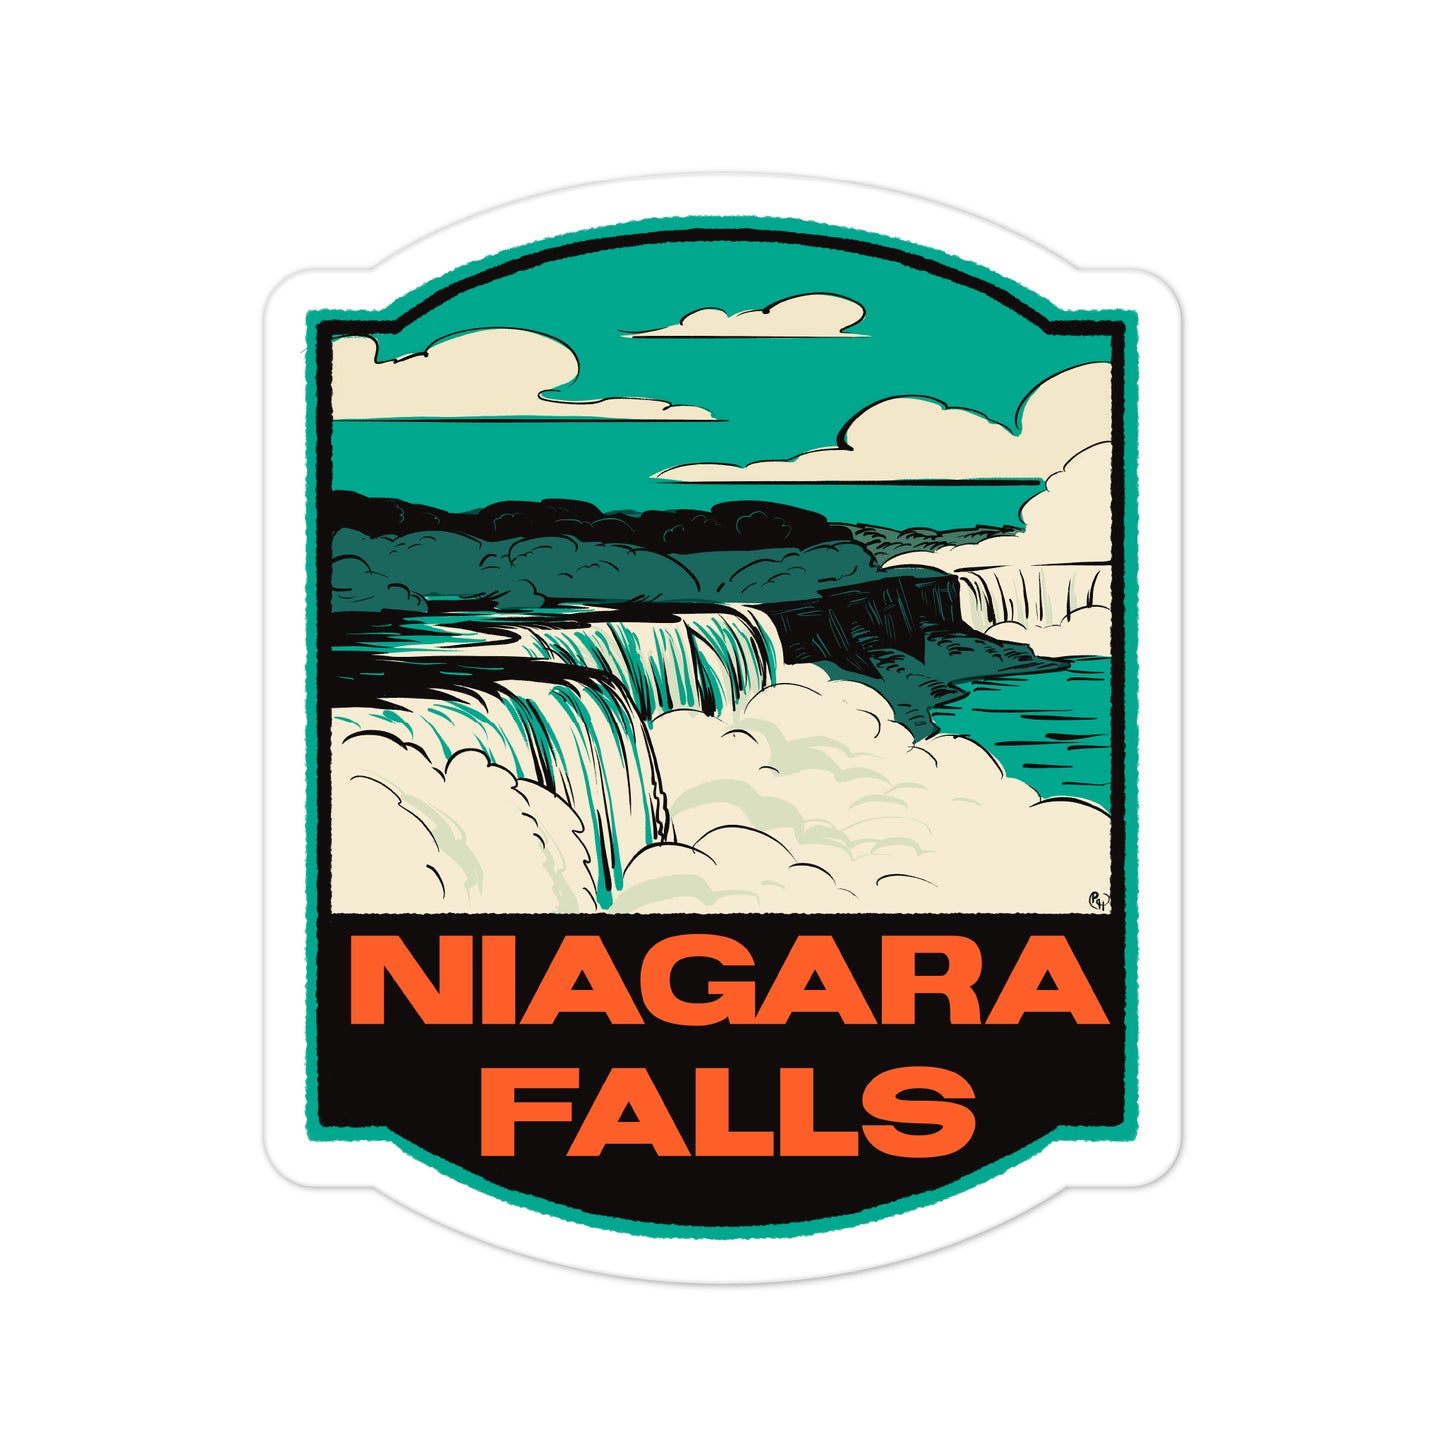 A sticker of Niagara Falls New York